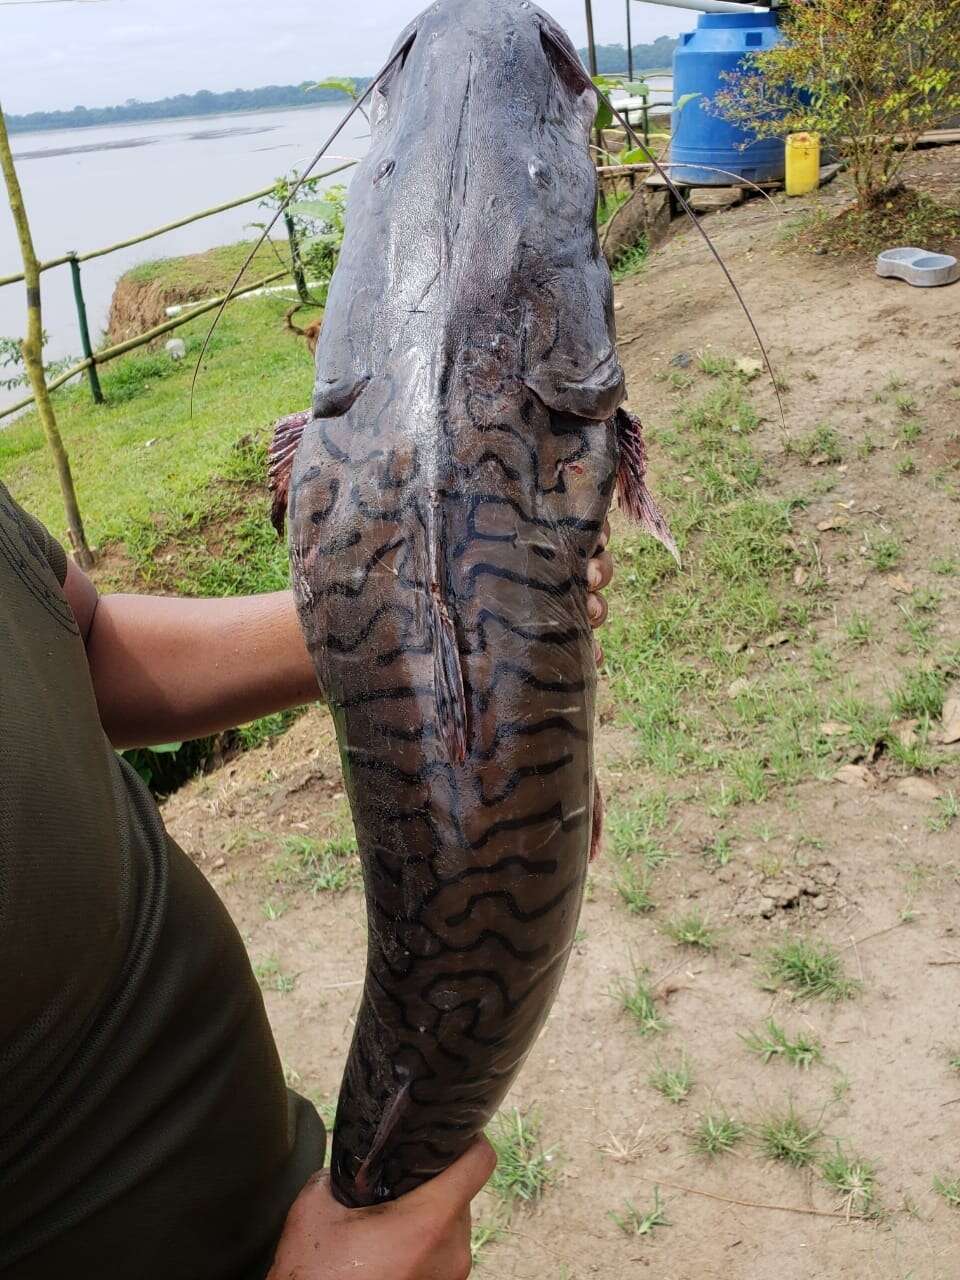 Image of Tiger catfish